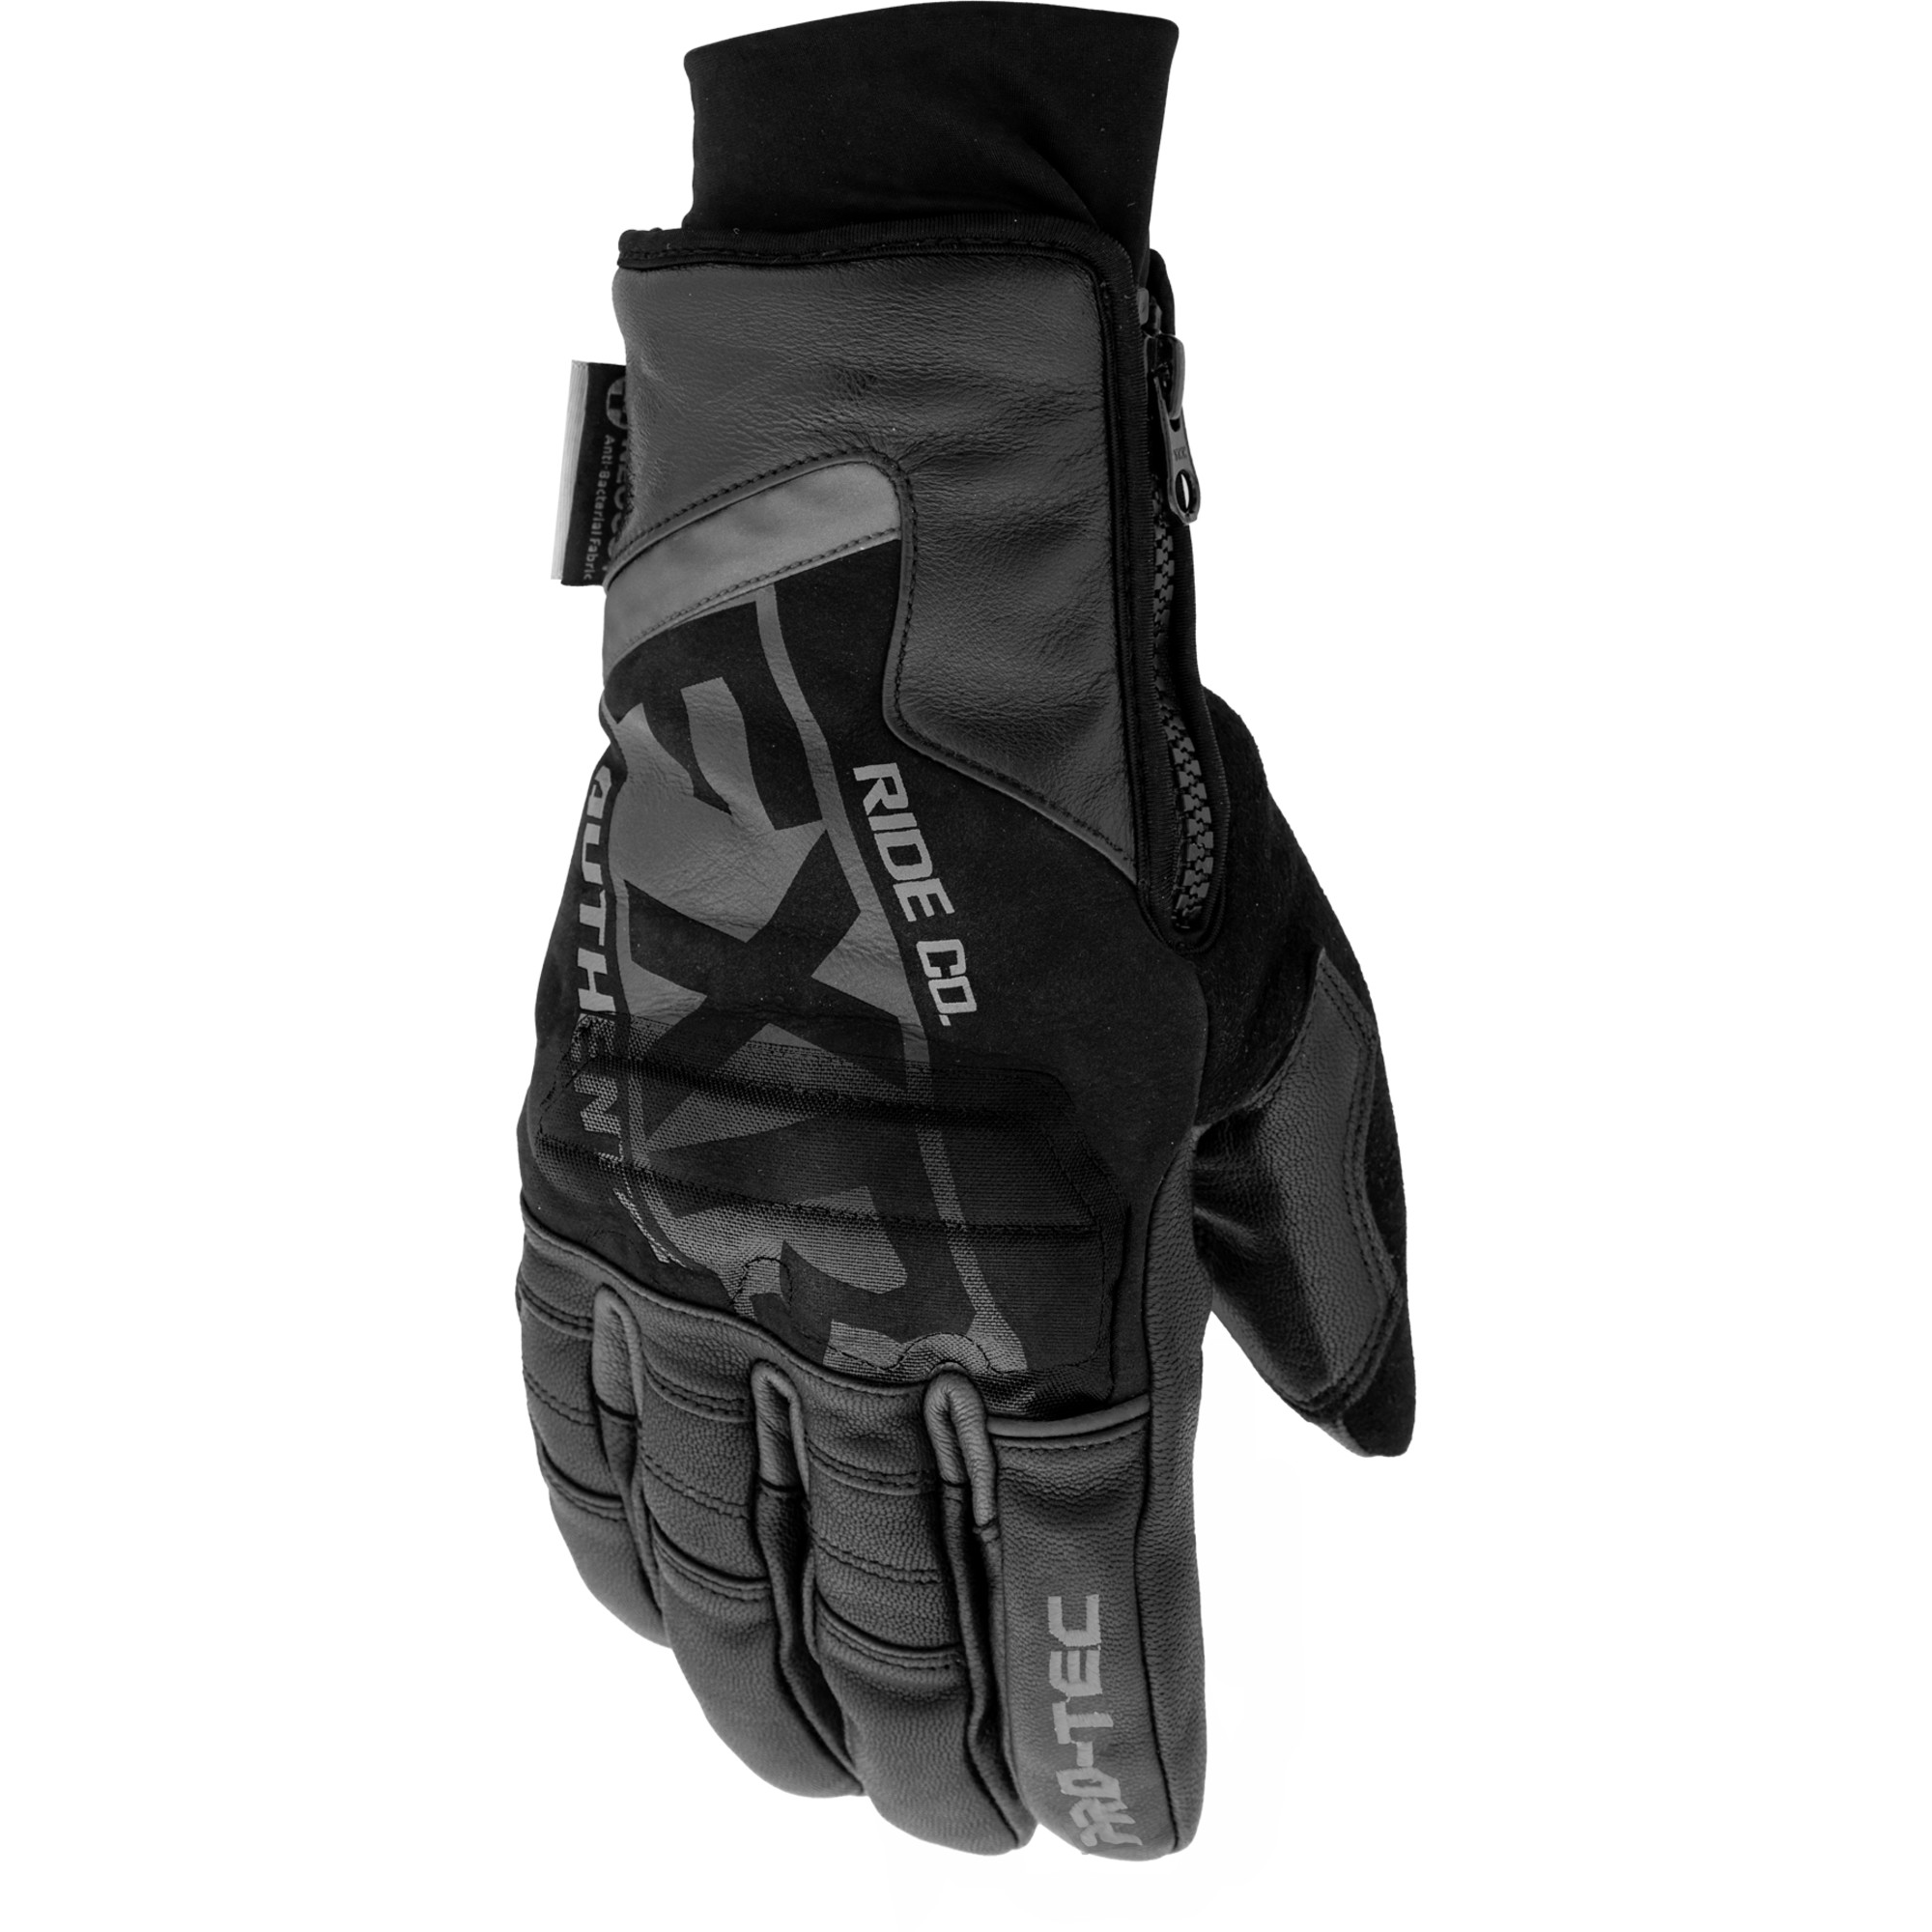 fxr racing gloves for men pro tec leather